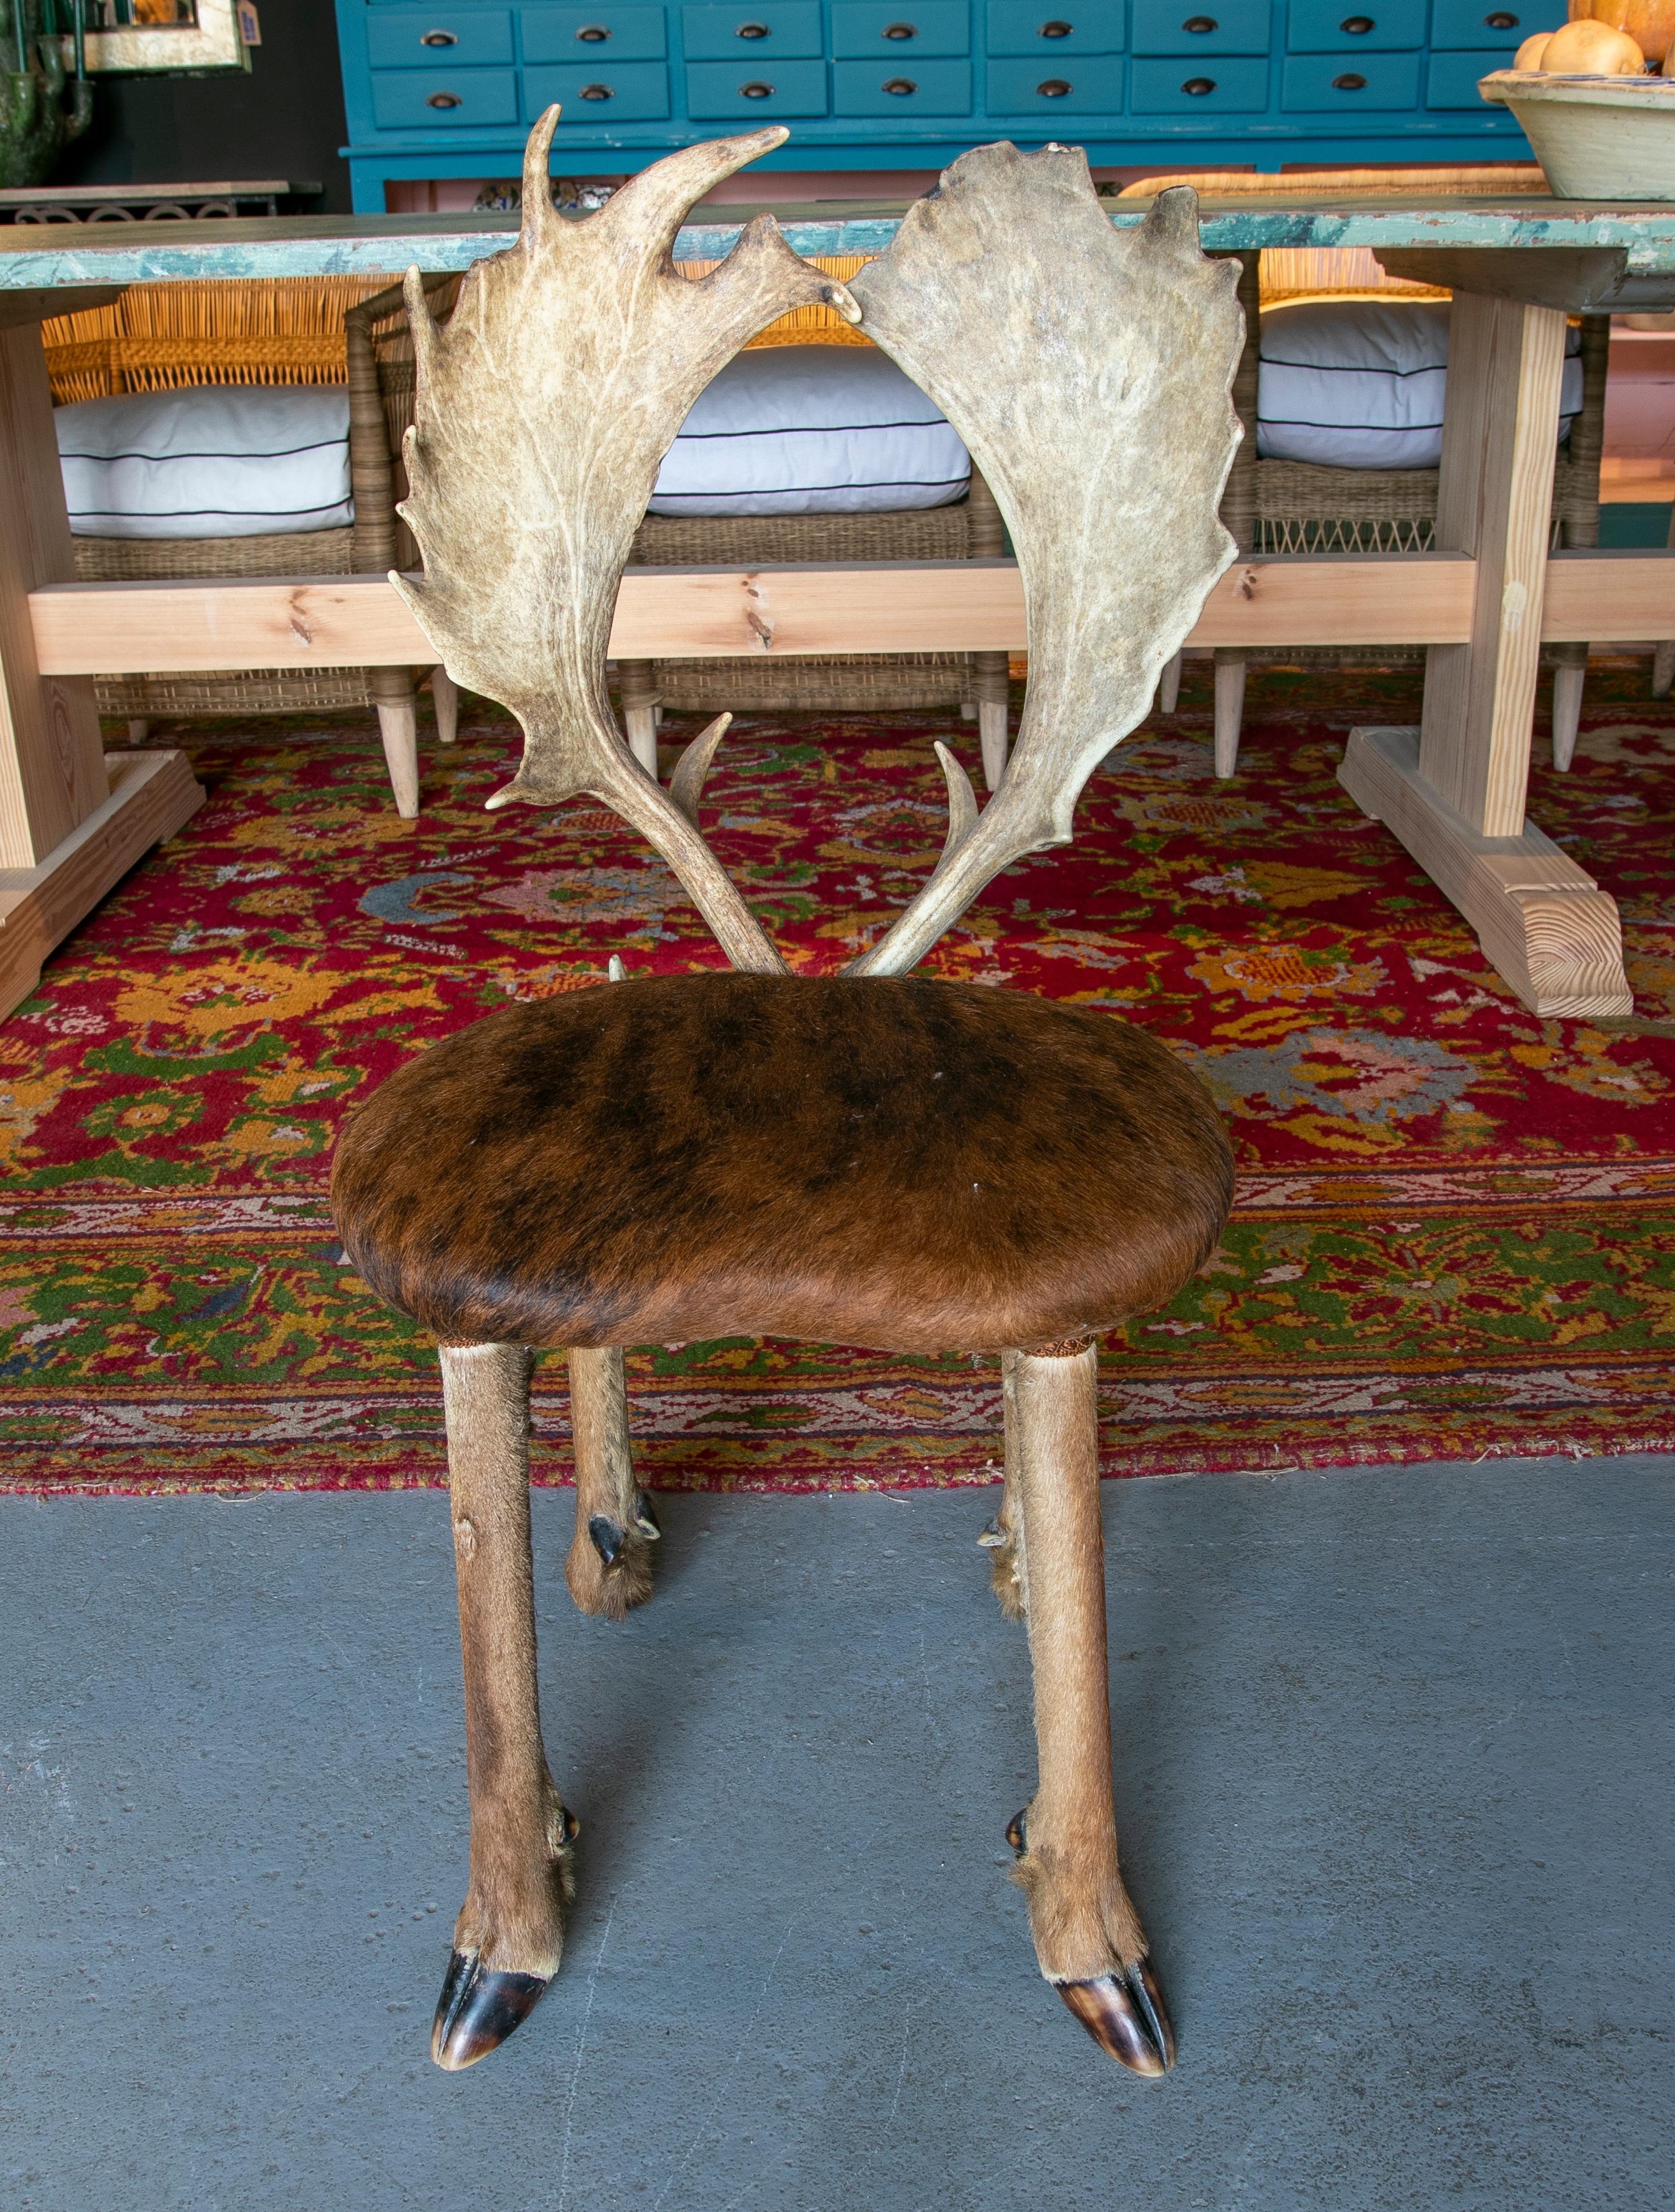 1950s Austrian chair with deer leather seat, hoof legs & antlers backrest.